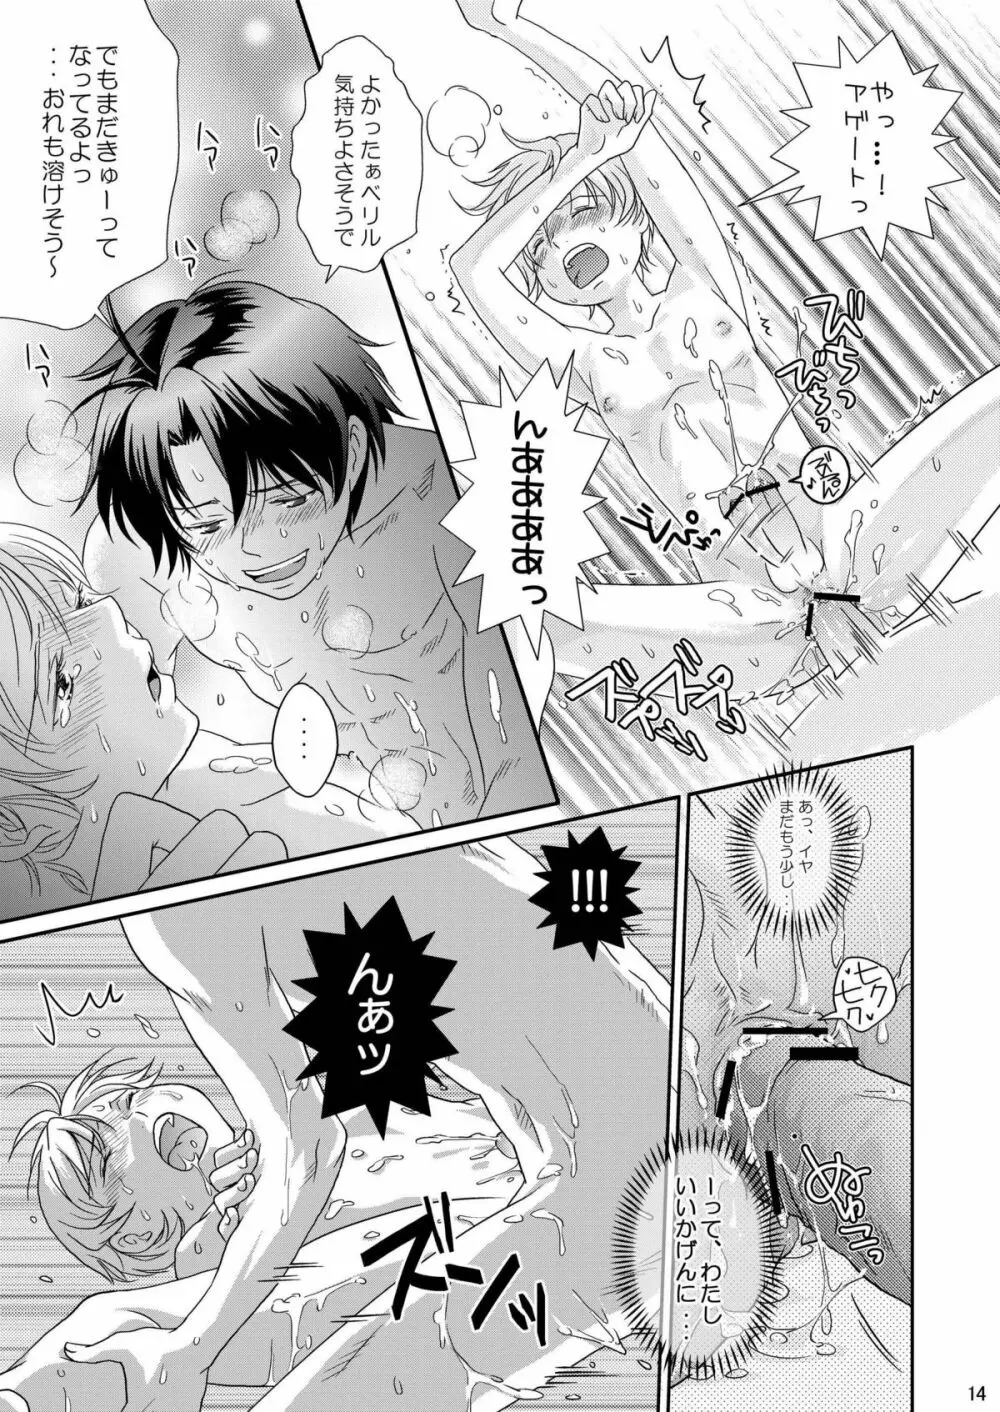 Re: ぷれい2 - page14